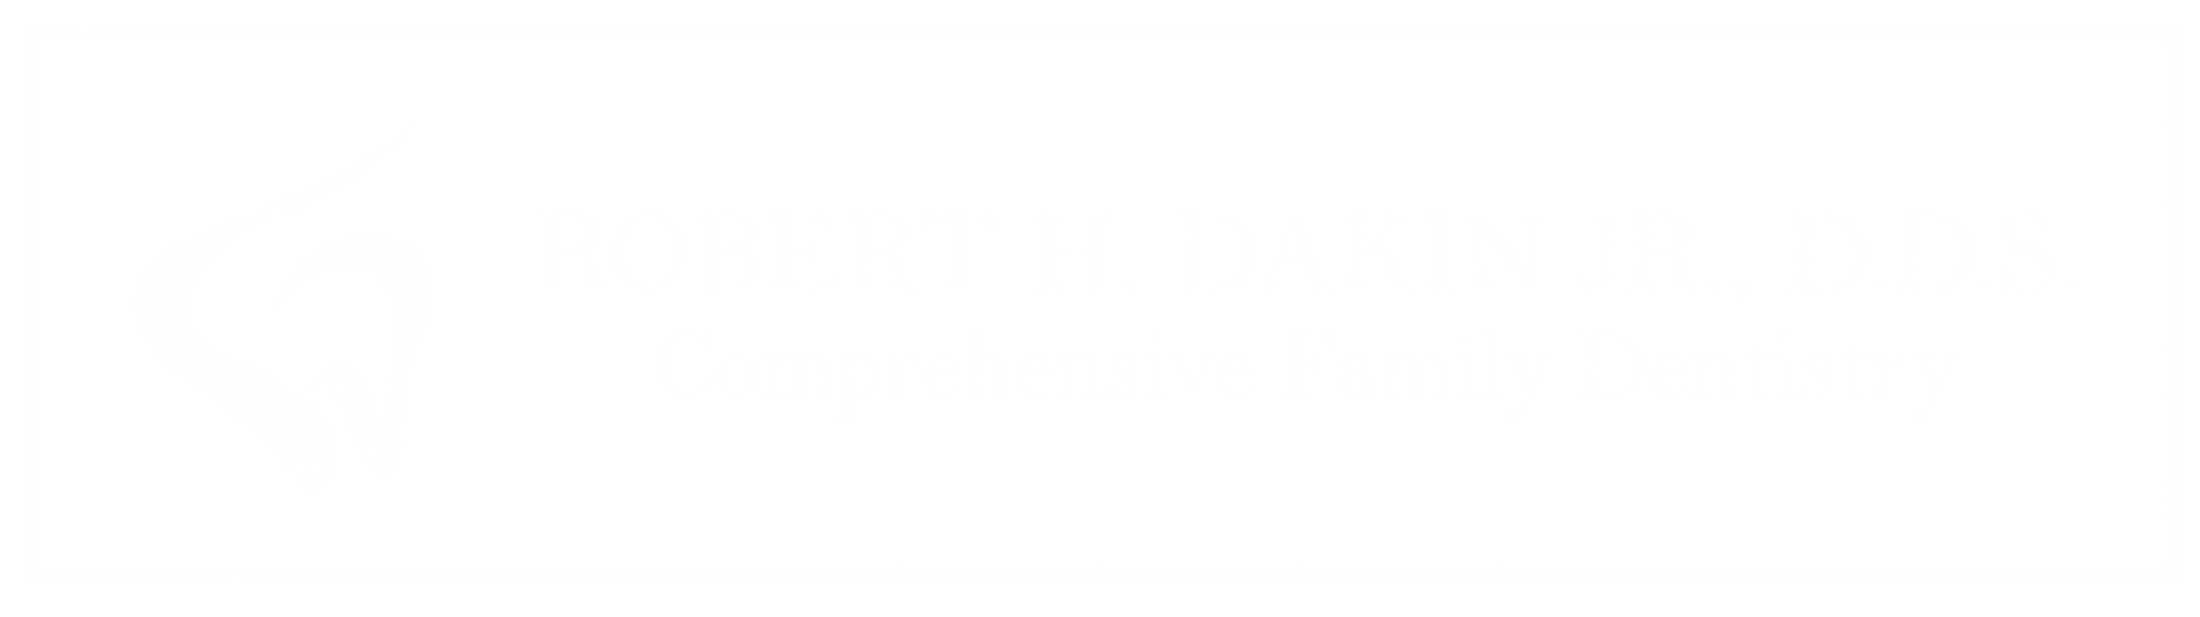 Link to Robert H. Dakin Jr., D.D.S. | Comprehensive Family Dentistry home page